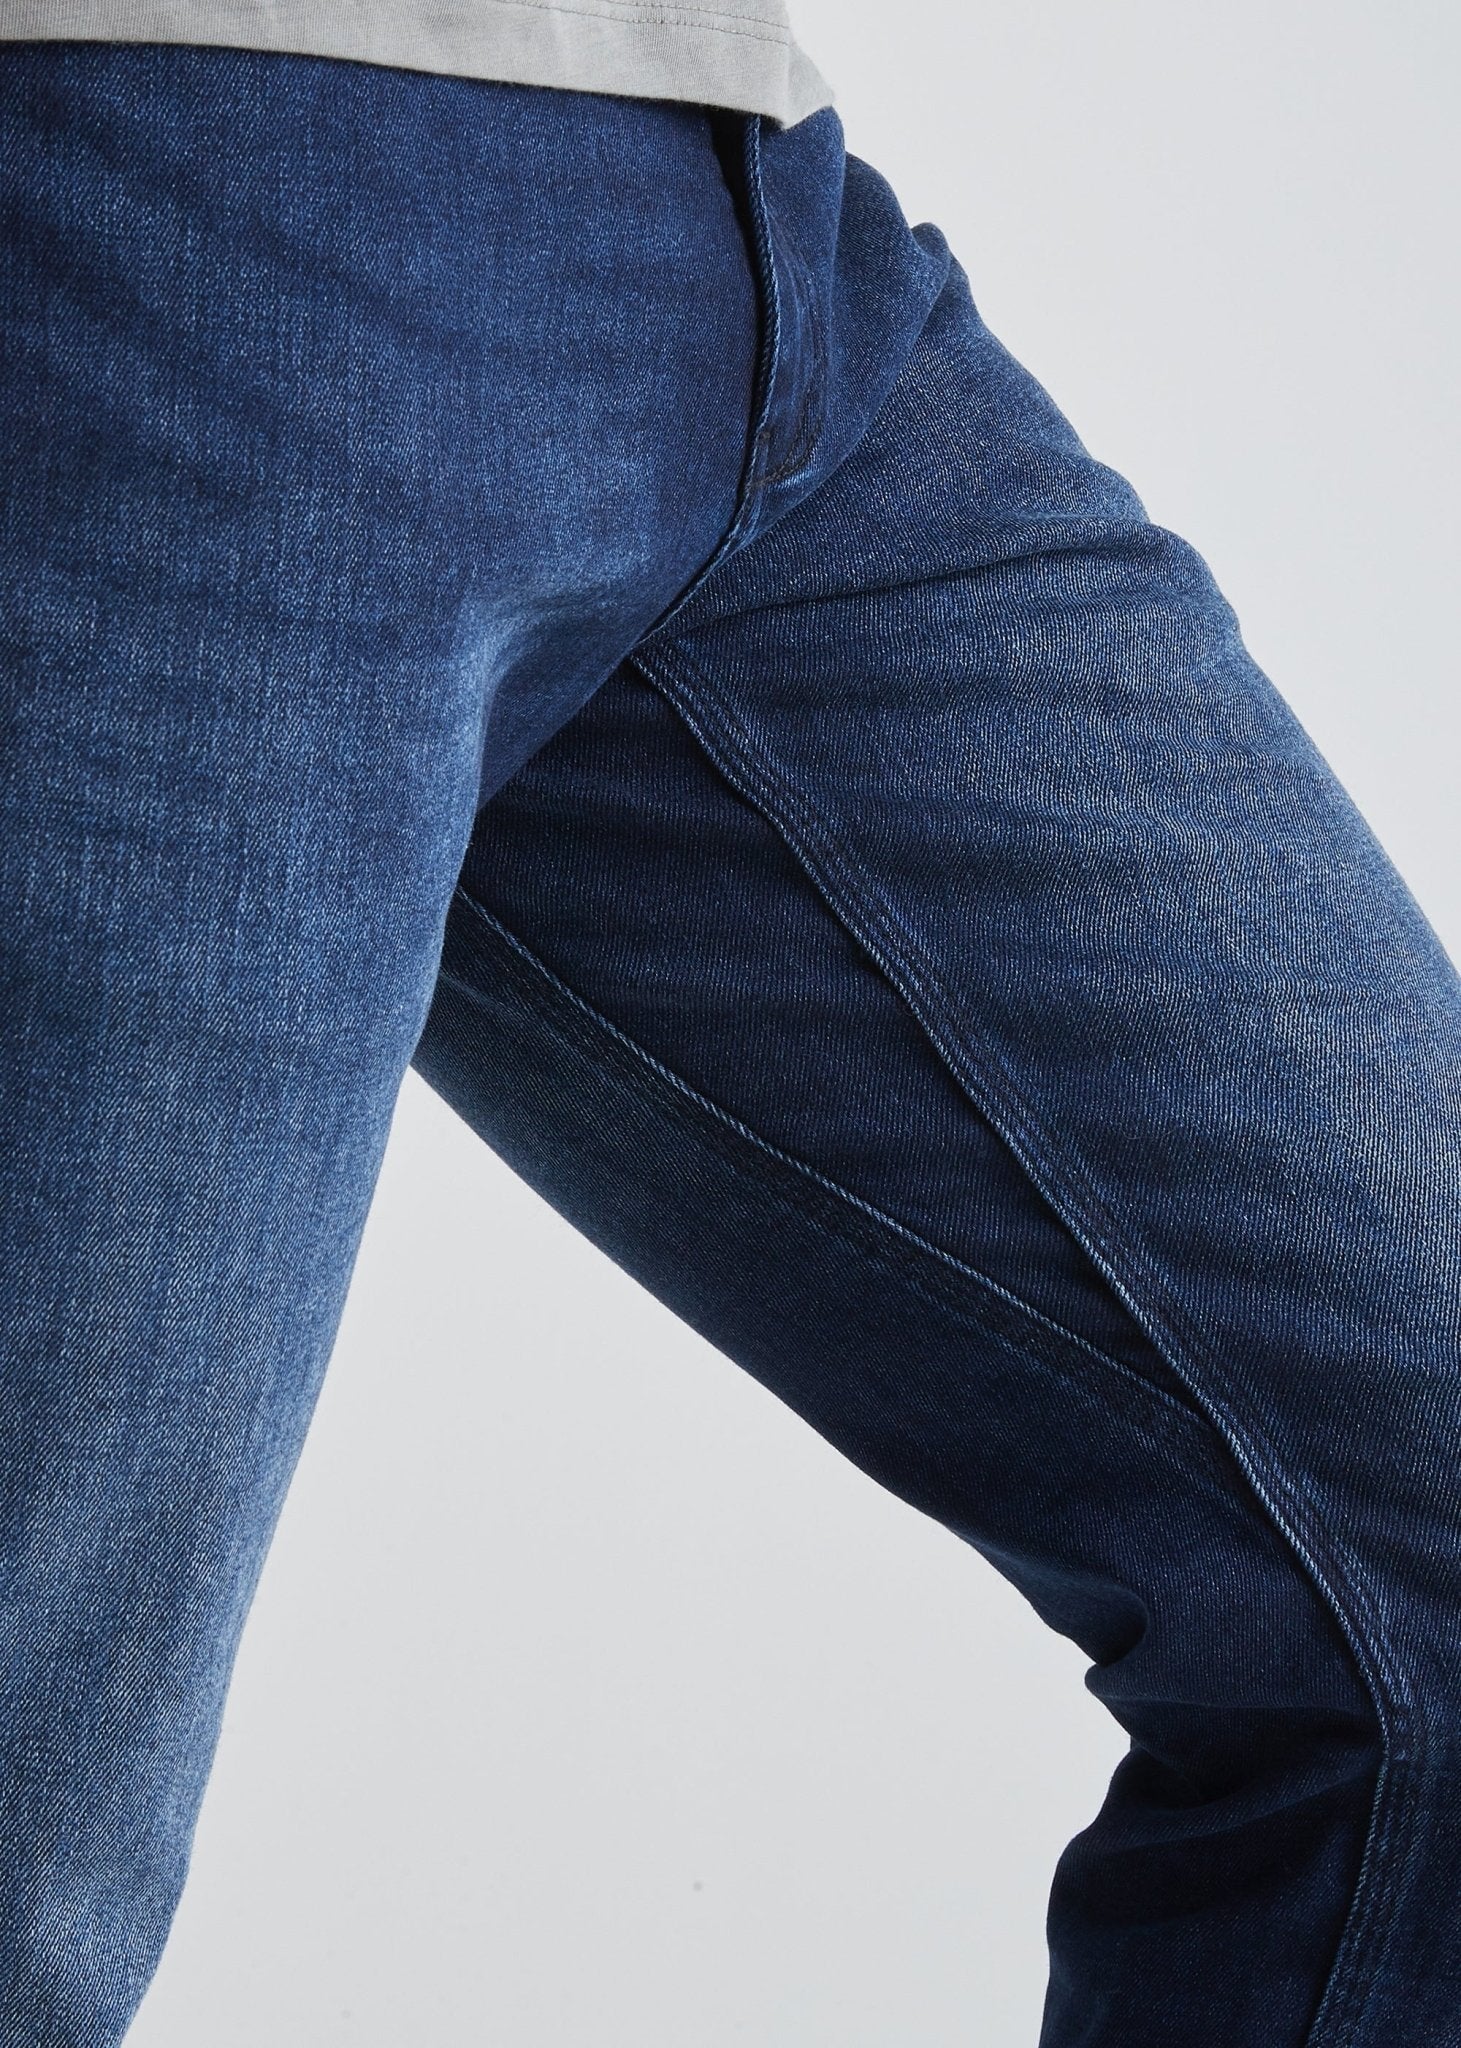 Men's Slim Fit Water Resistant Stretch Jeans